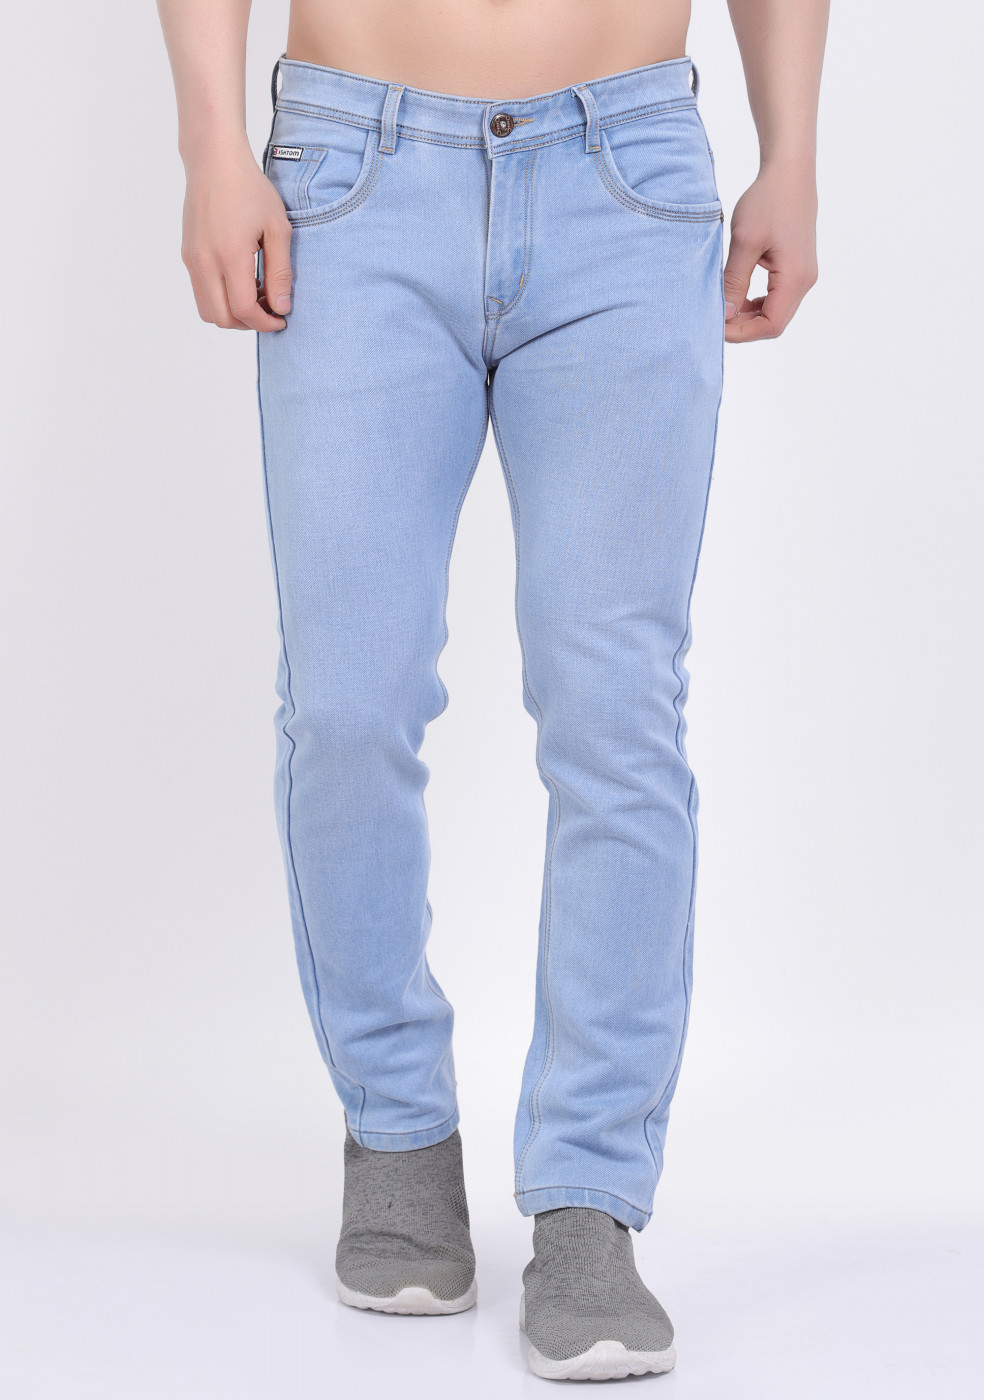 Stretchable Cotton Jeans For Men